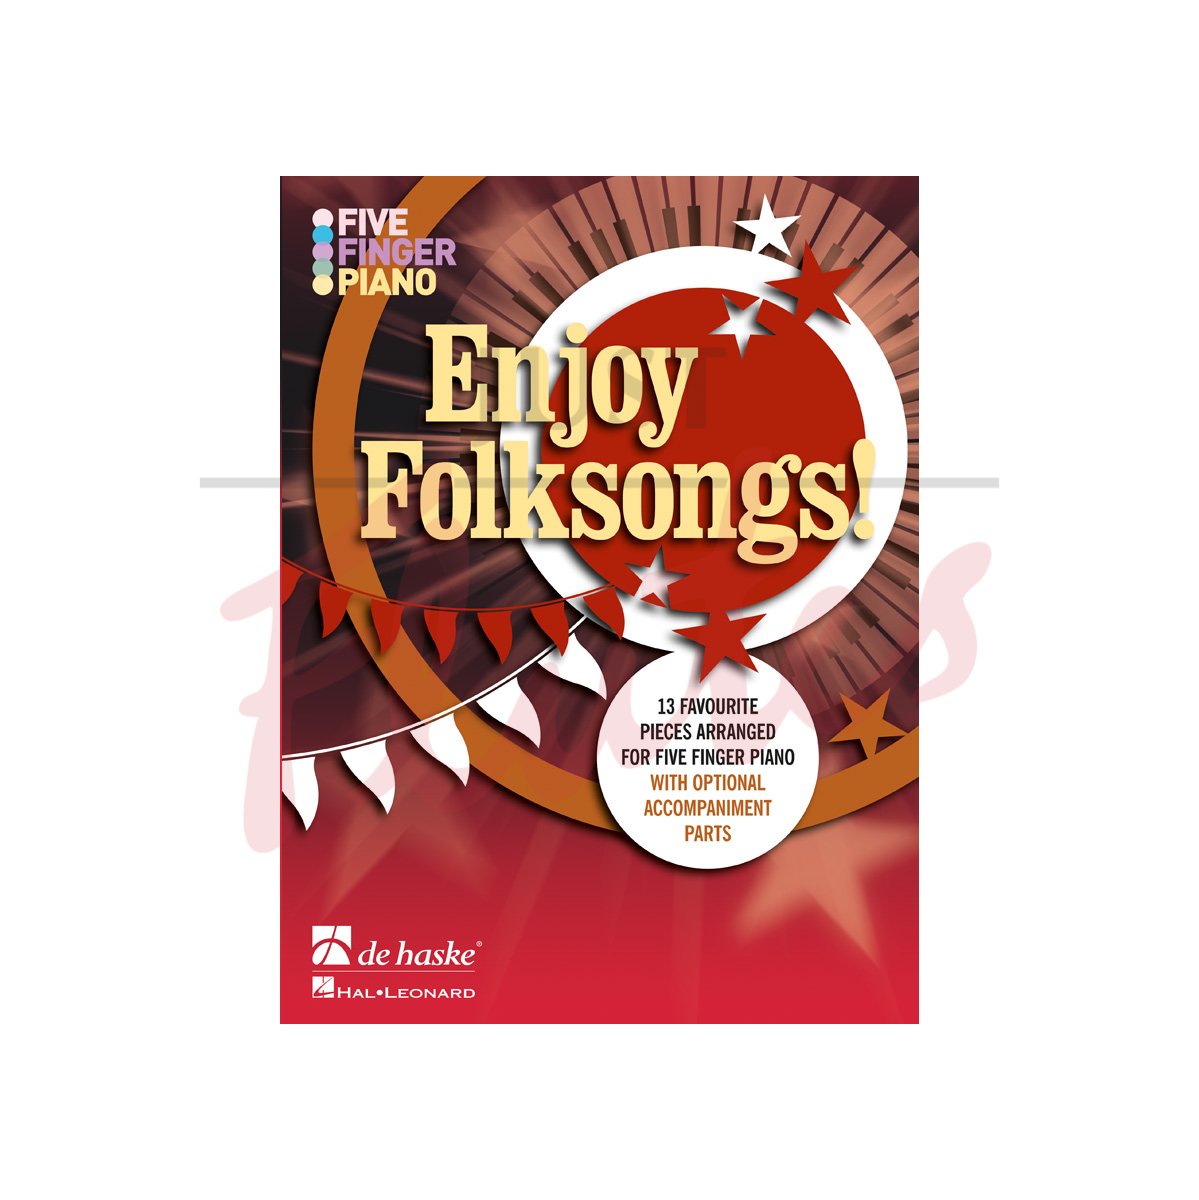 Enjoy Folksongs [Five Finger Piano]